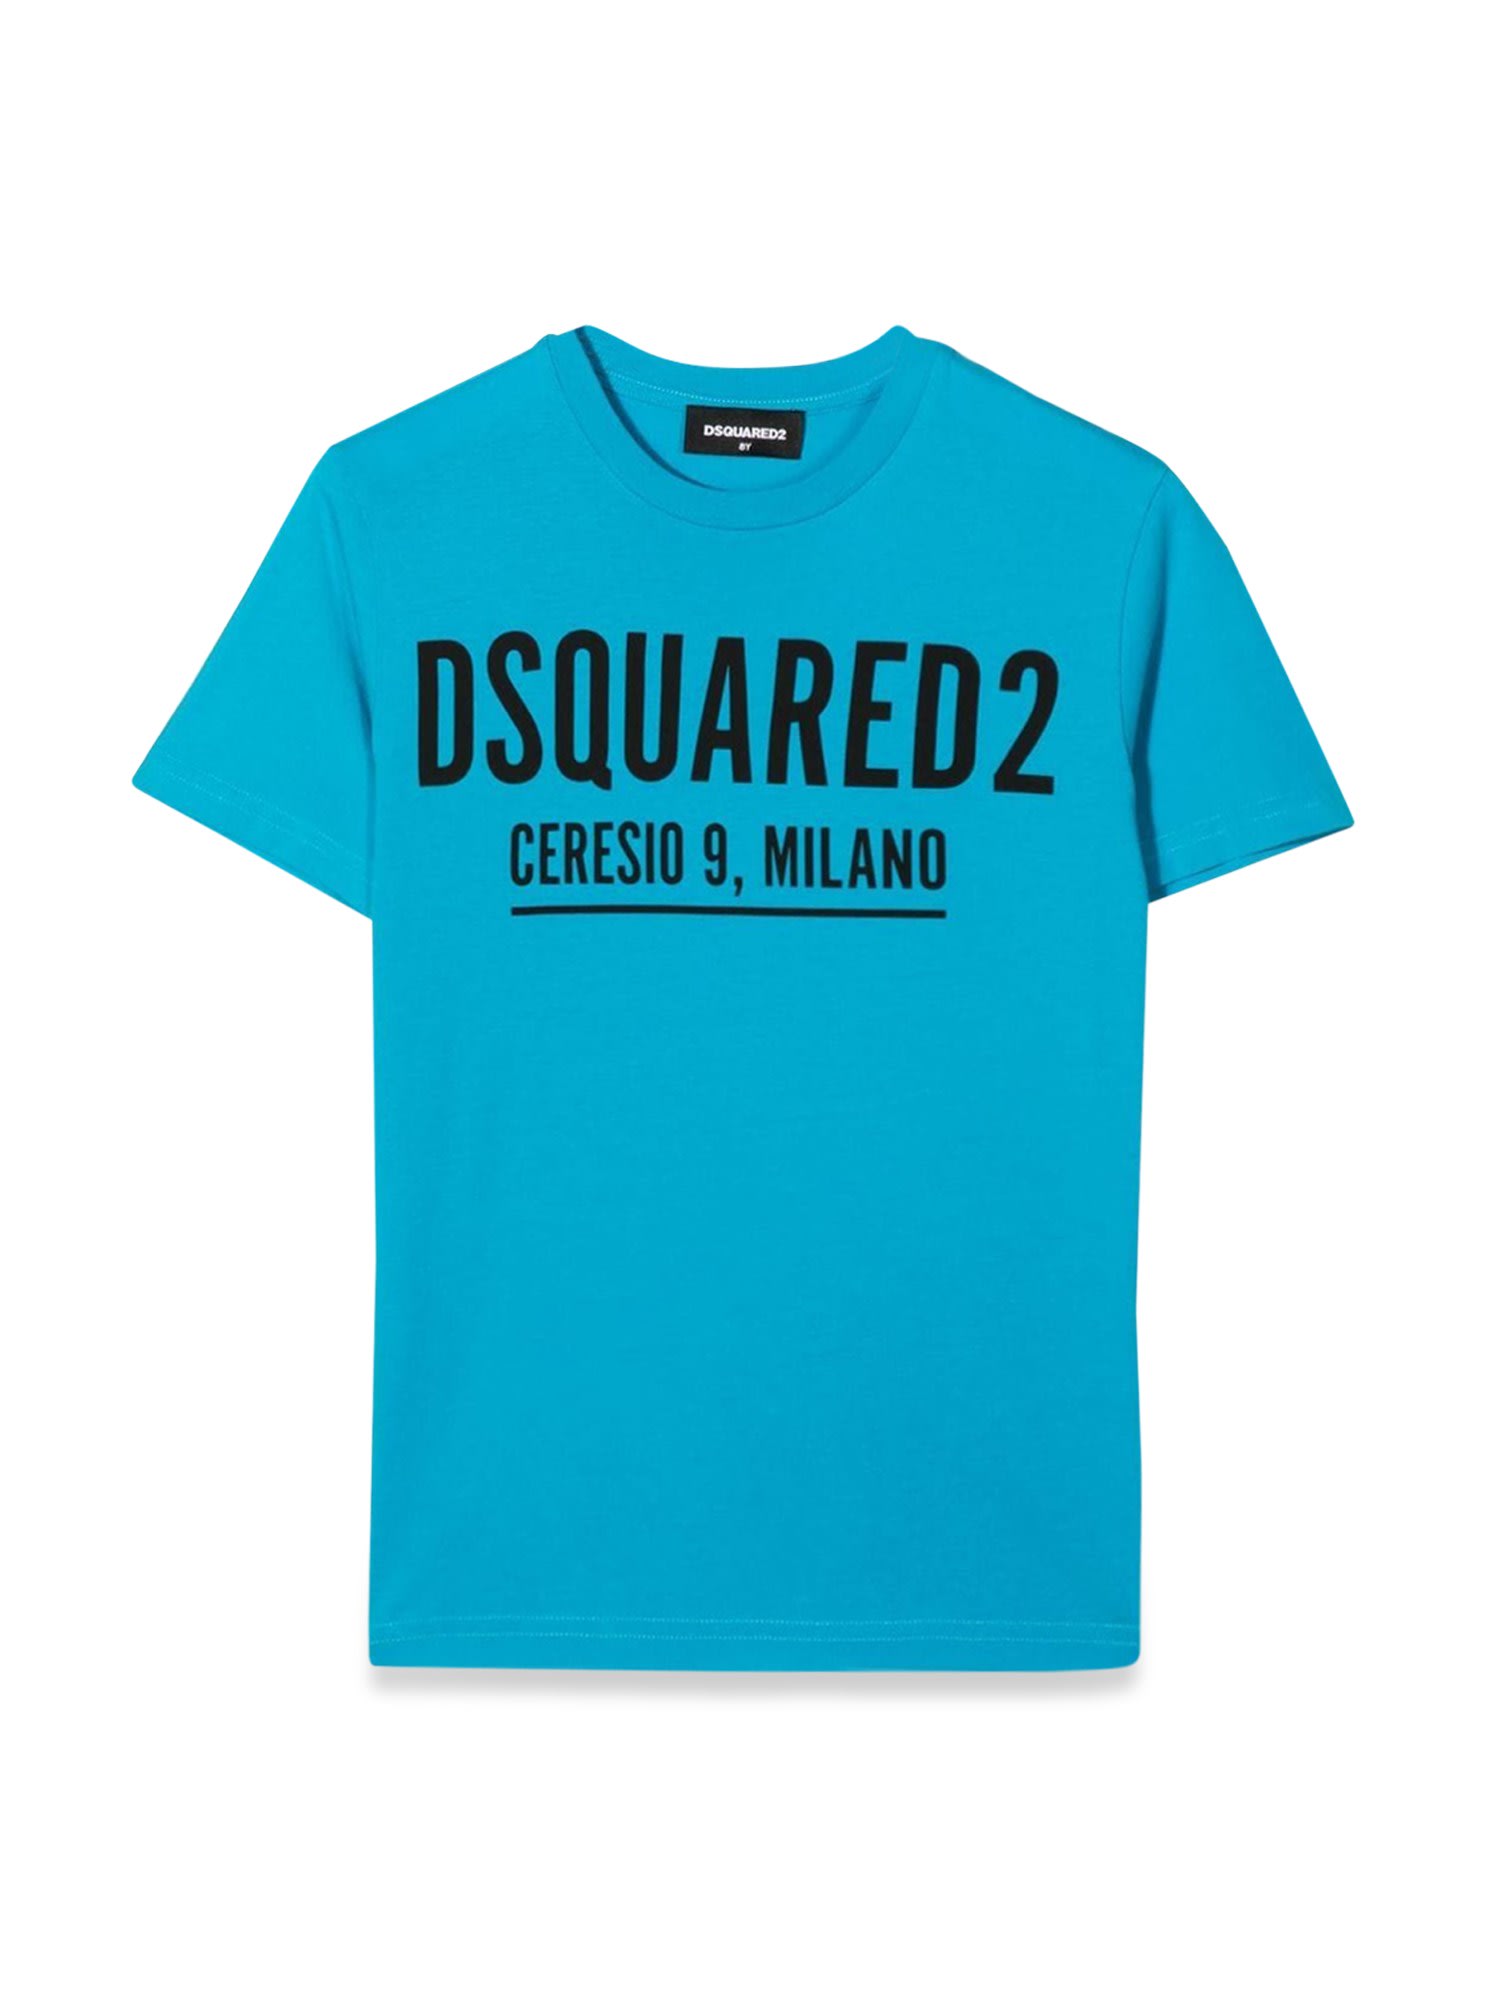 Dsquared2 T-shirt Written Ceresio